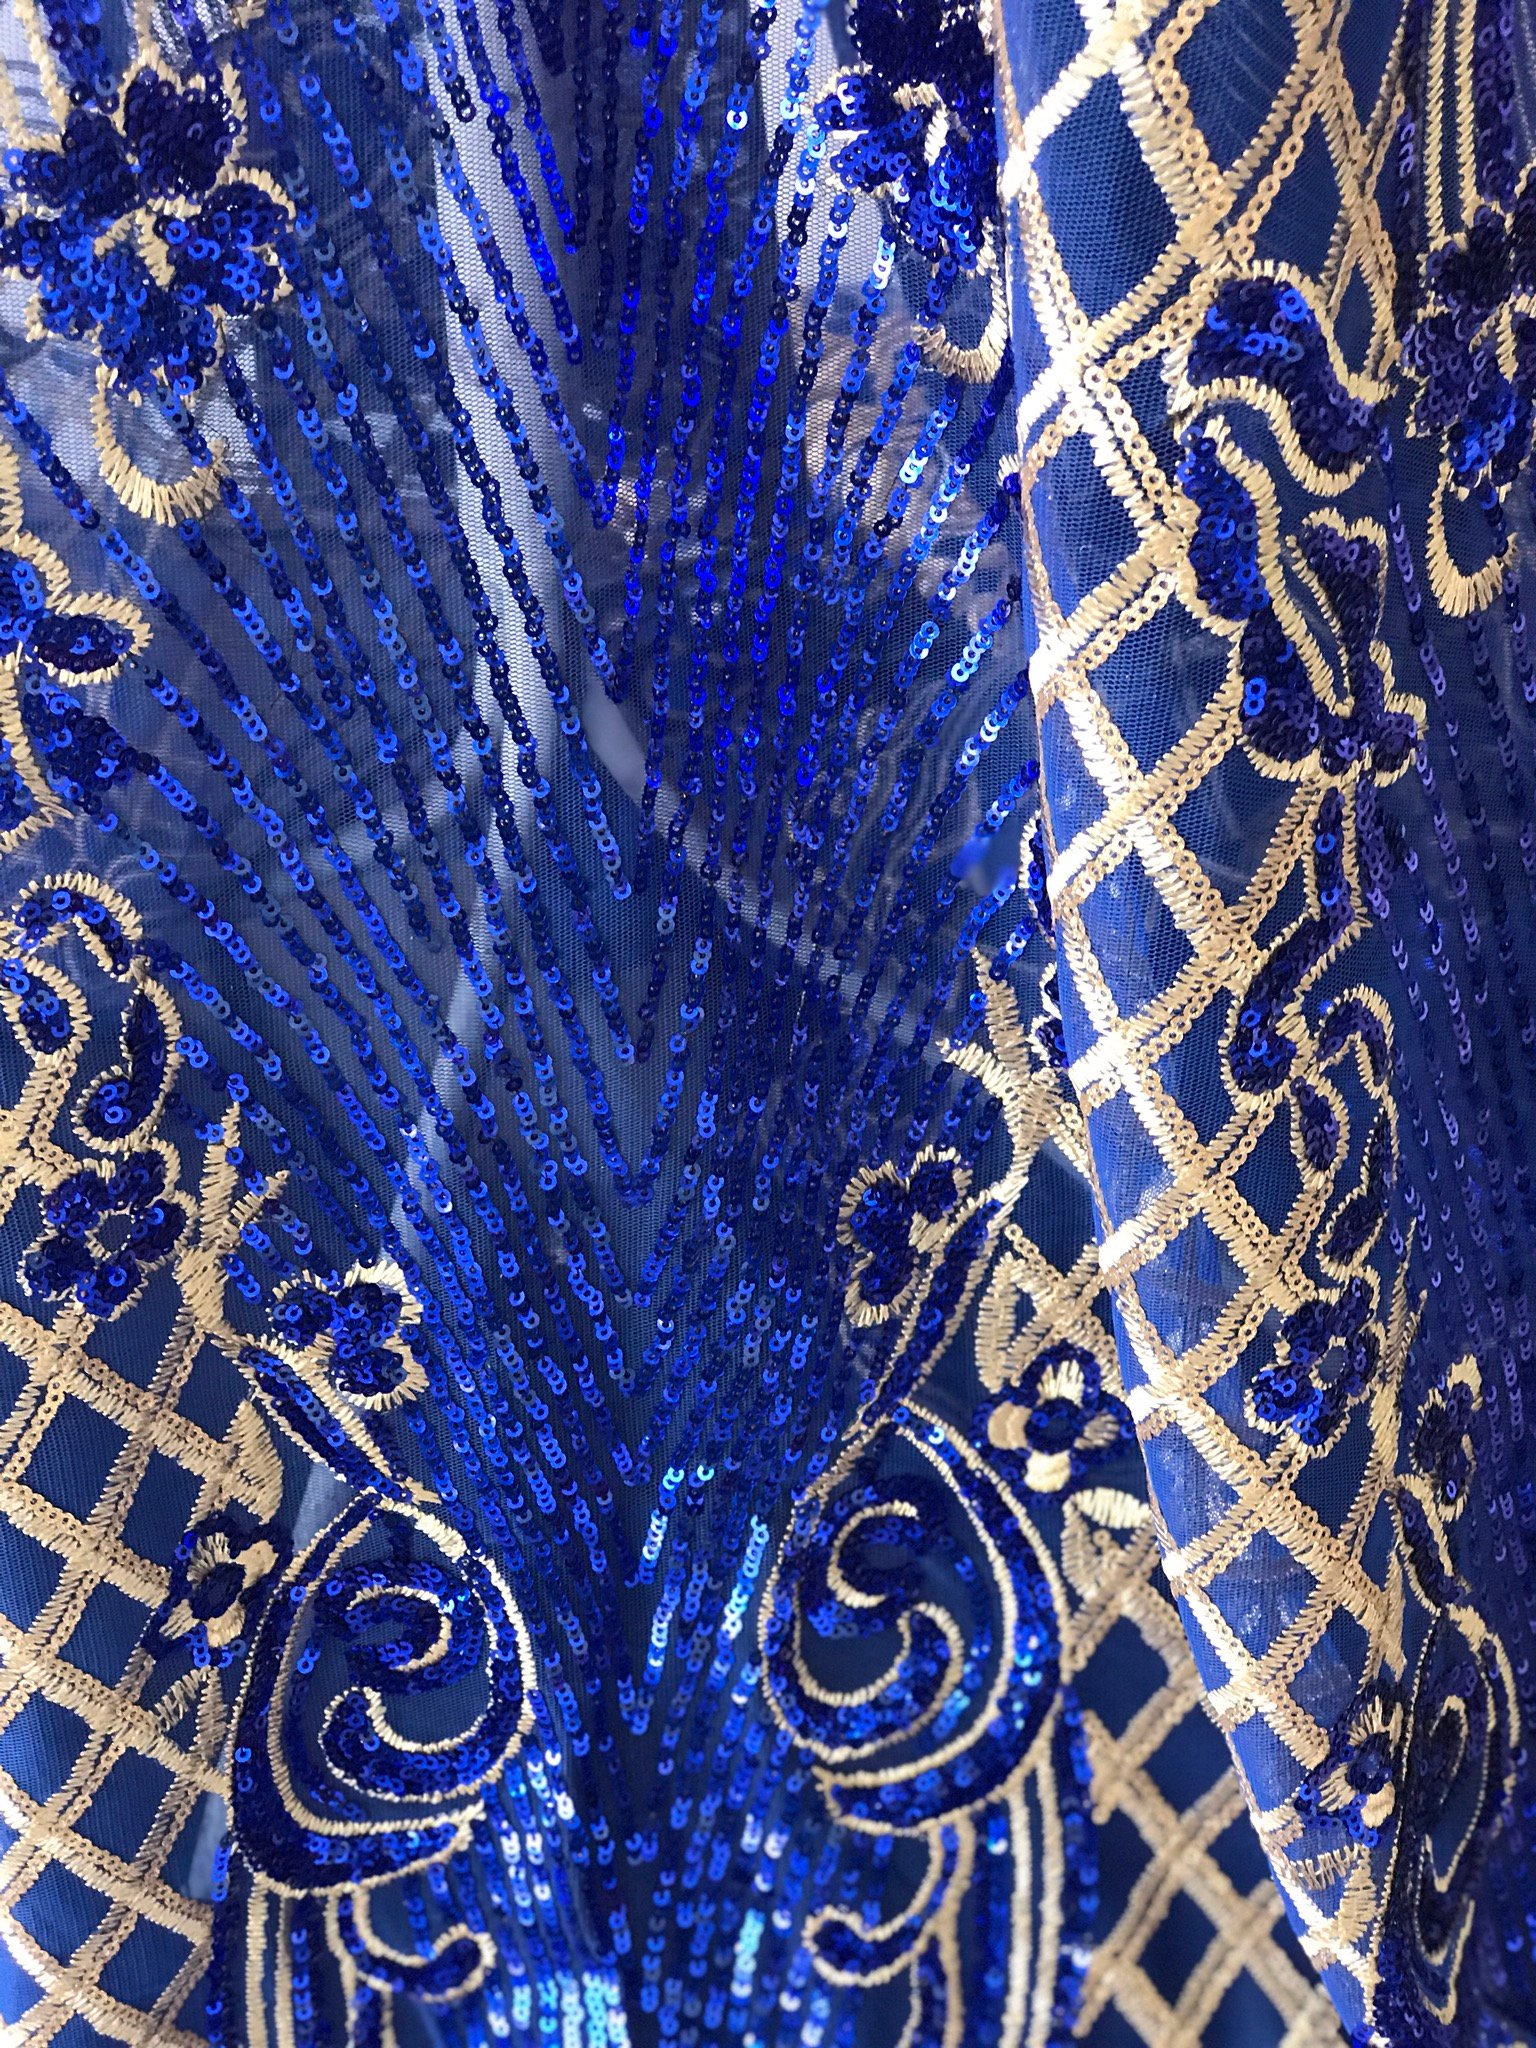 Gold on cobalt blue sequins lace fabric Baroque design evening dress bridal